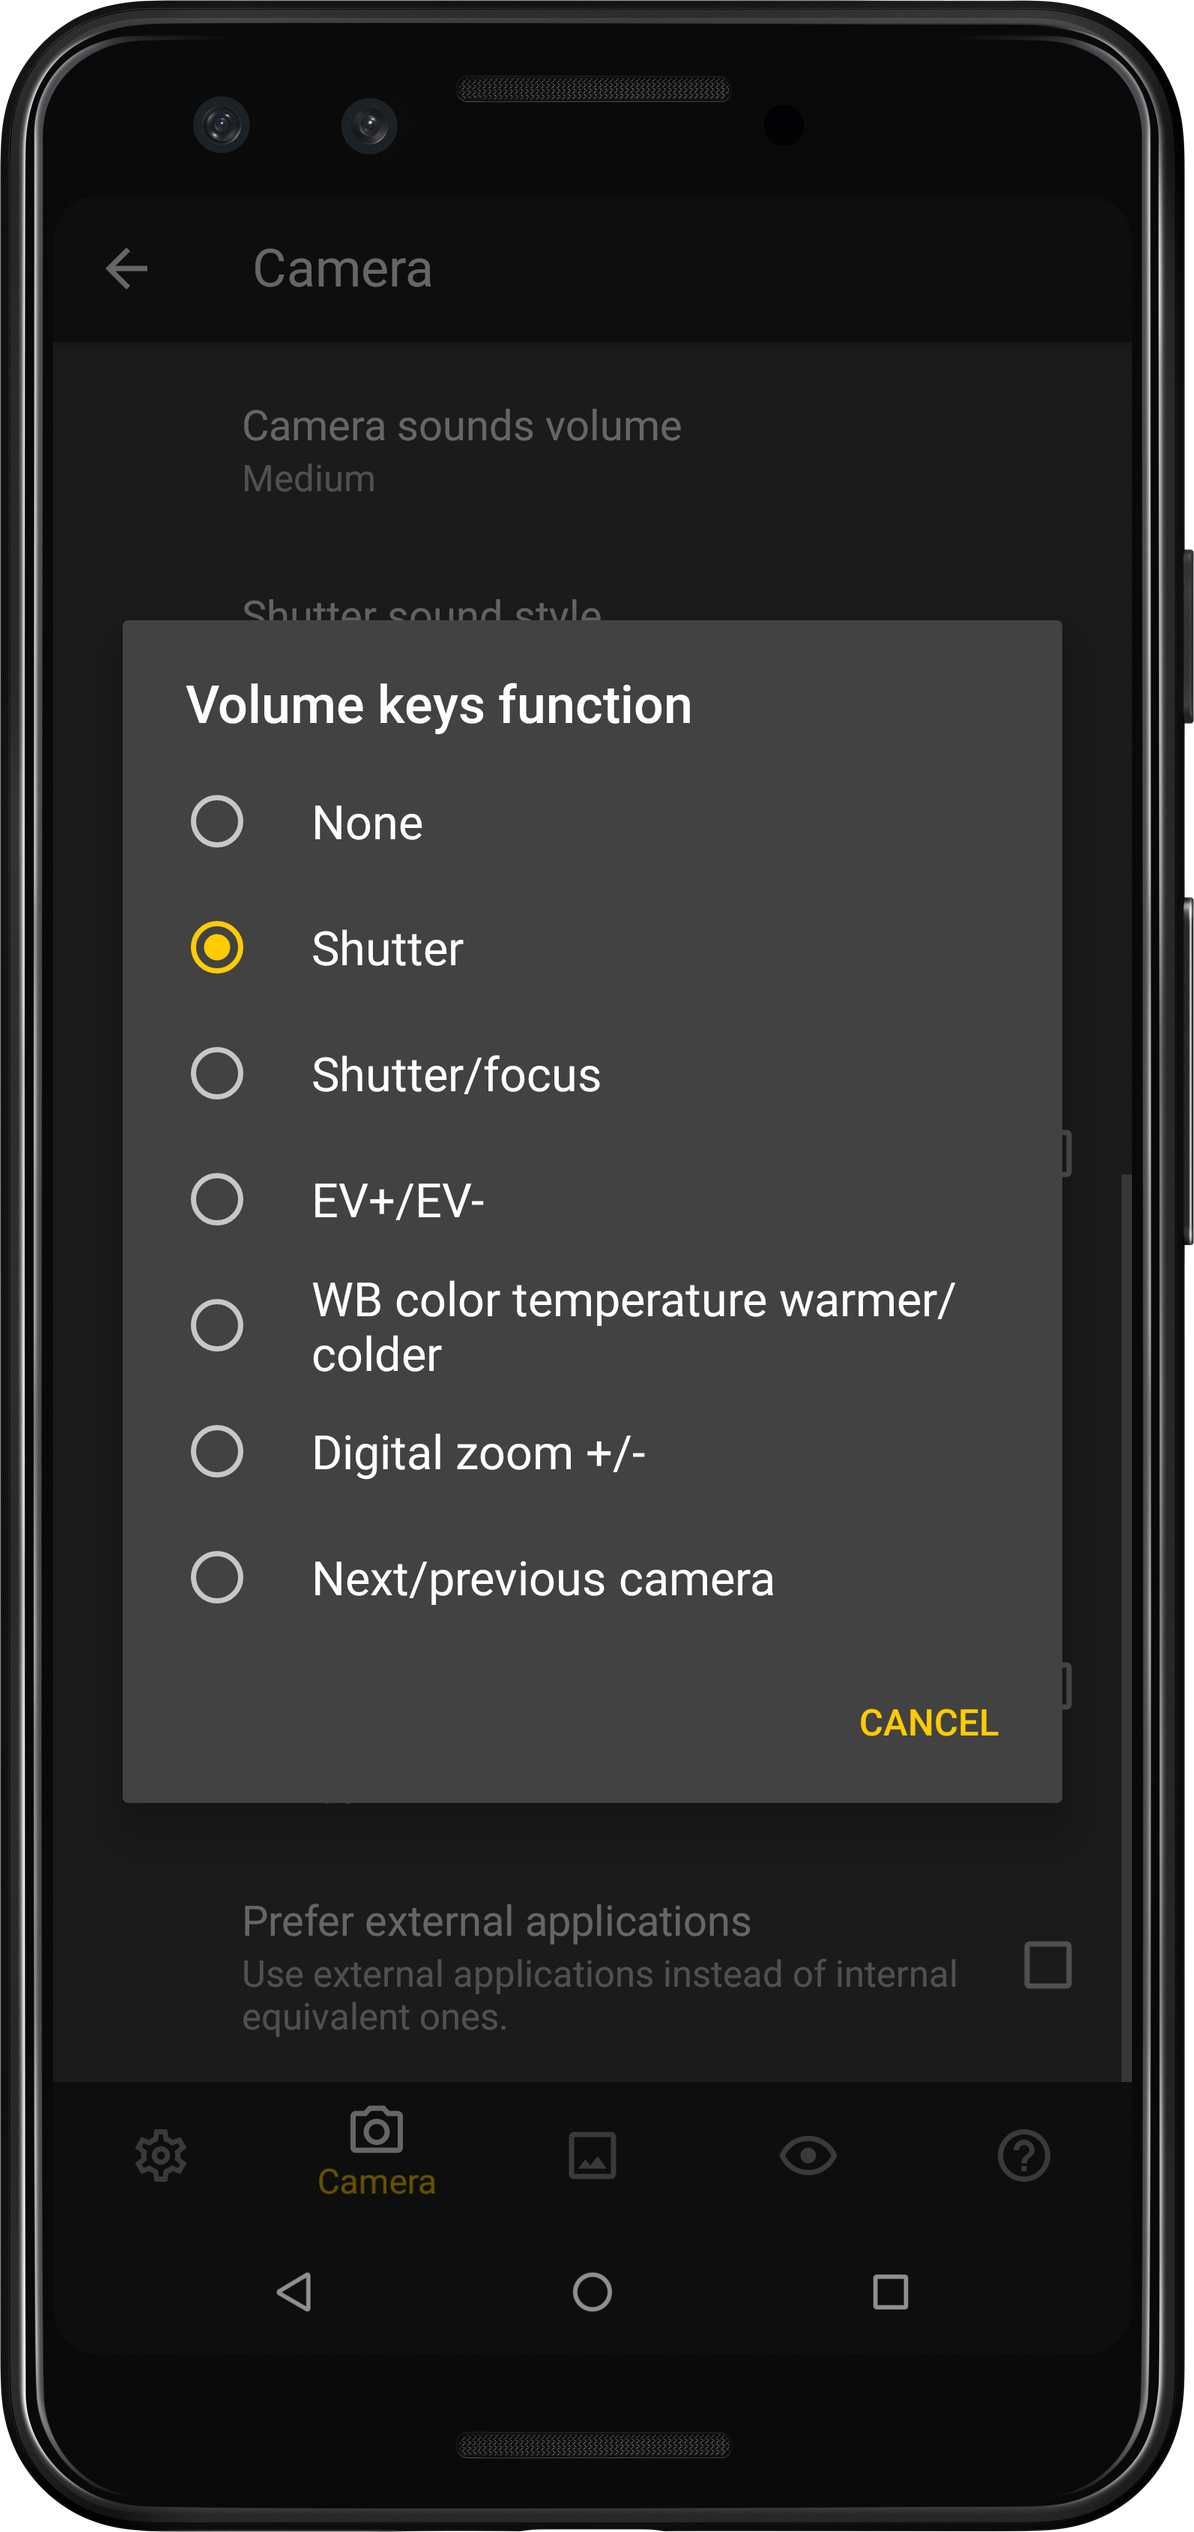 Volume keys function options